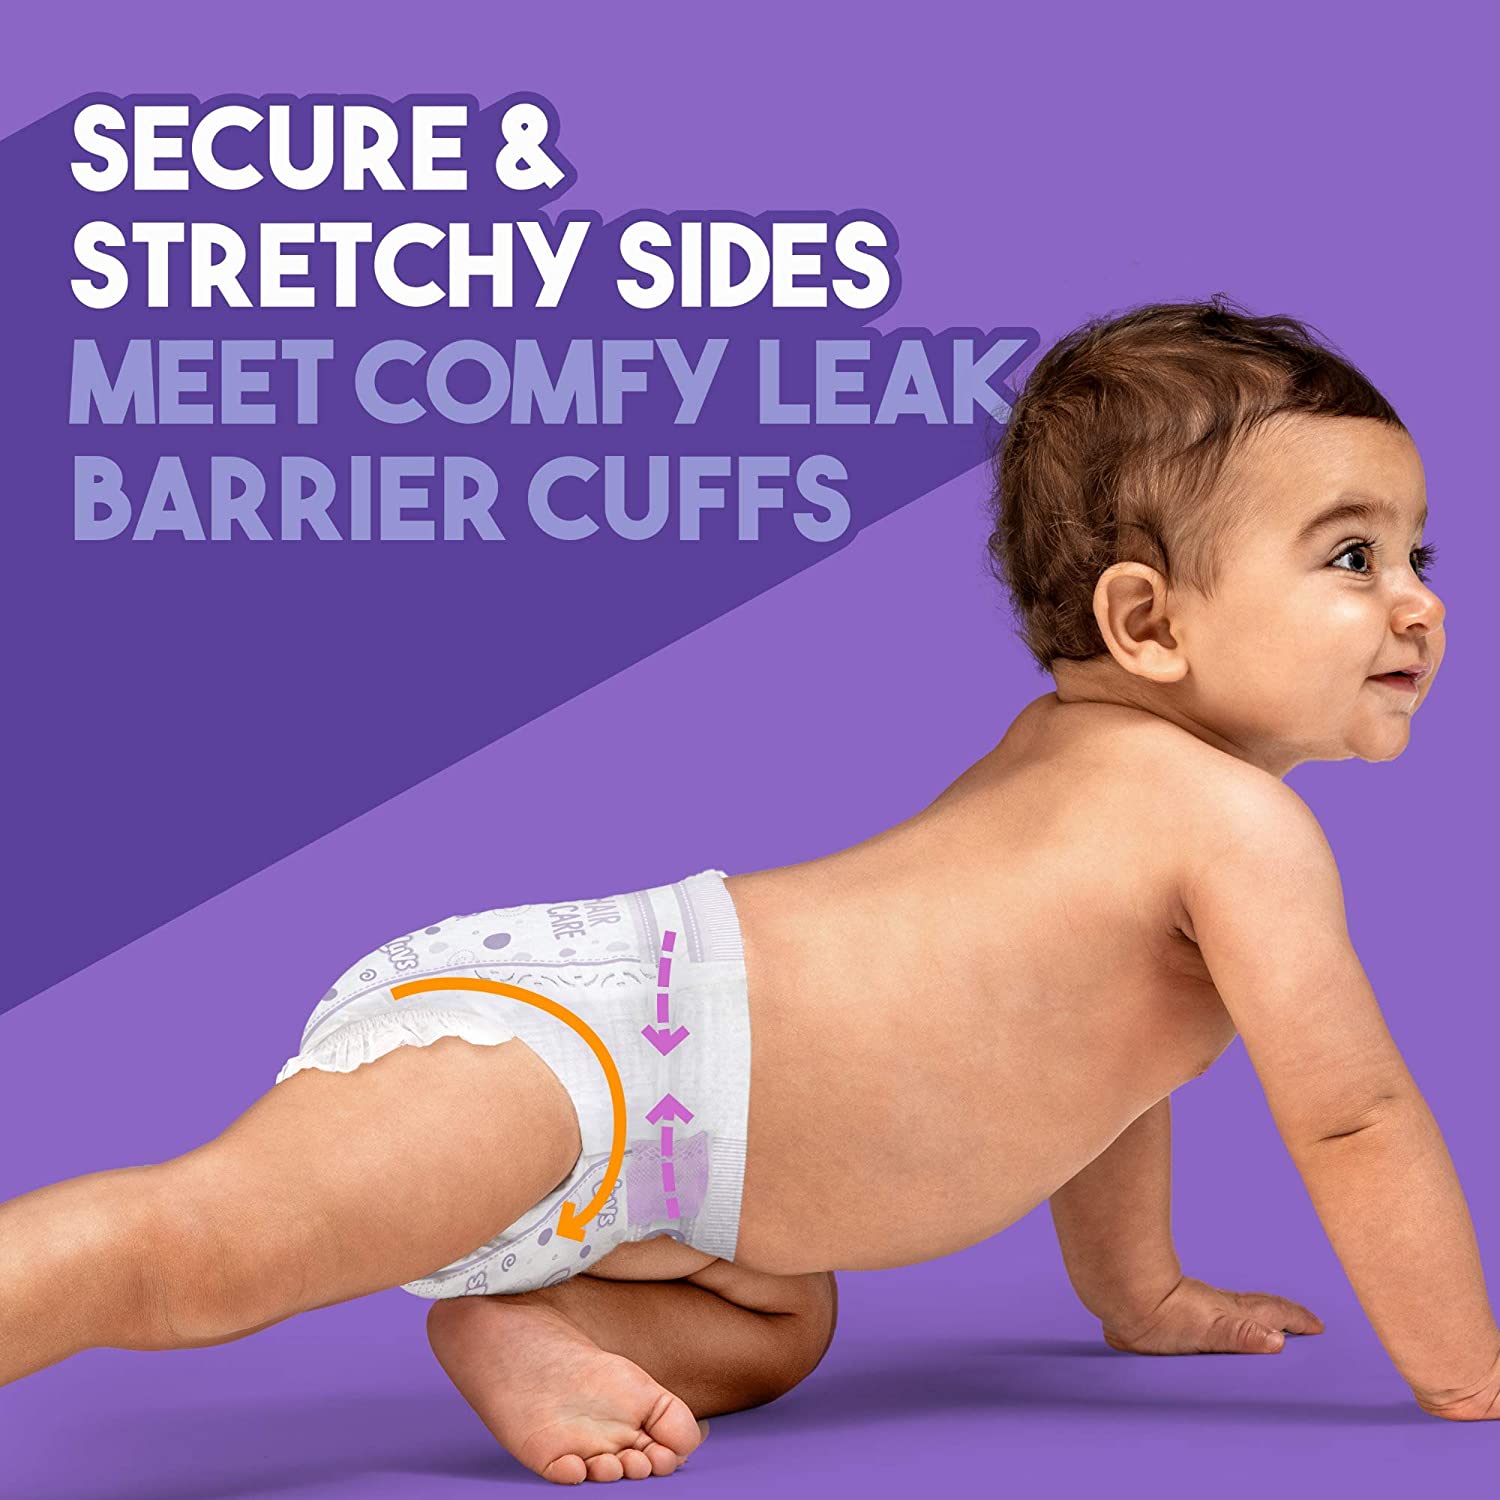 Pañales para recién nacido/talla 1 (8-14 libras), 252 unidades – Pampers  Baby Dry Pañales desechables para bebé, suministro de un mes con toallitas